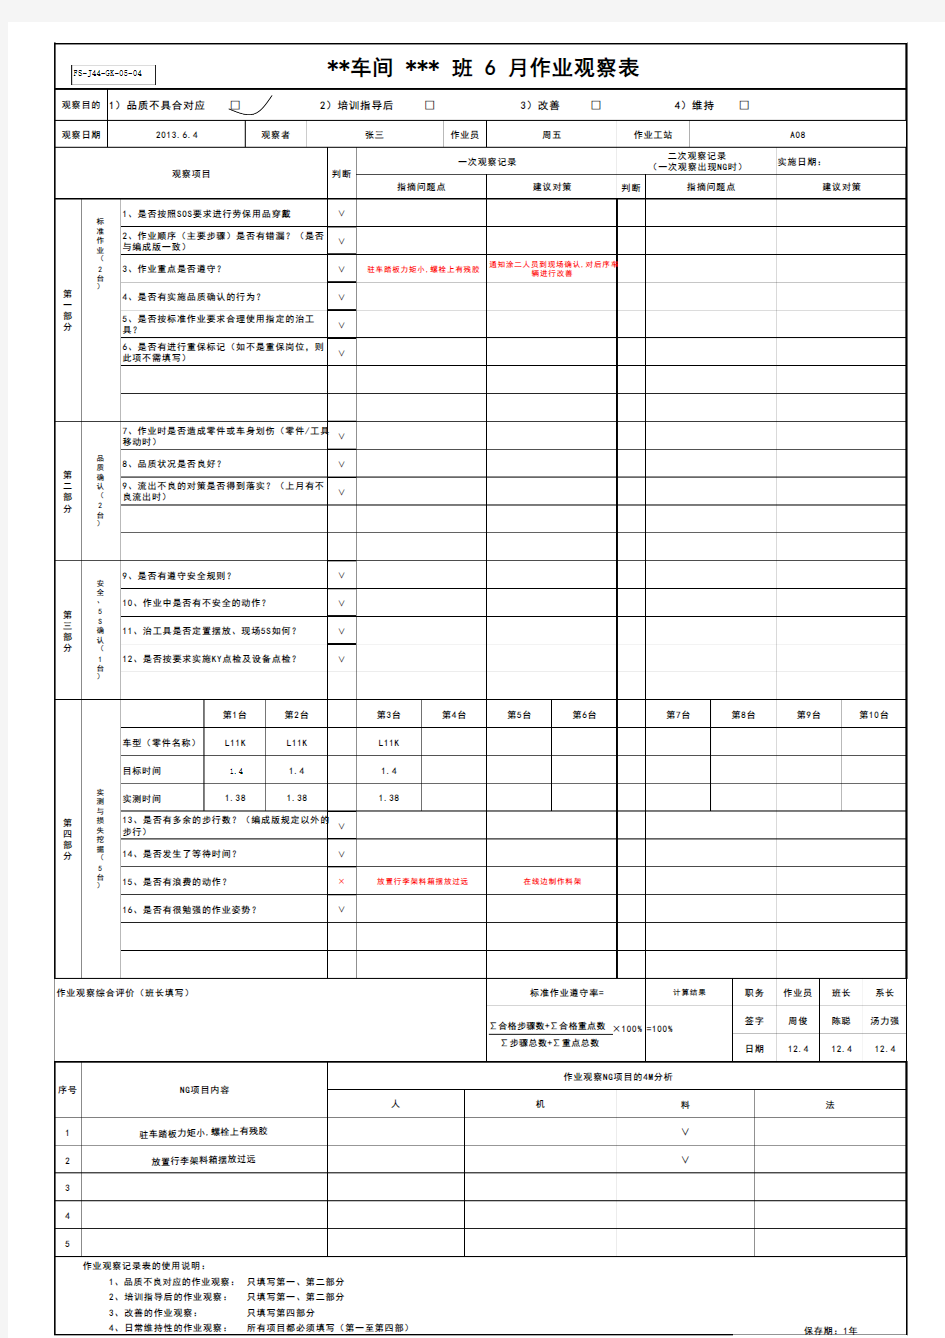 GK-04-07 作业观察记录表(新)